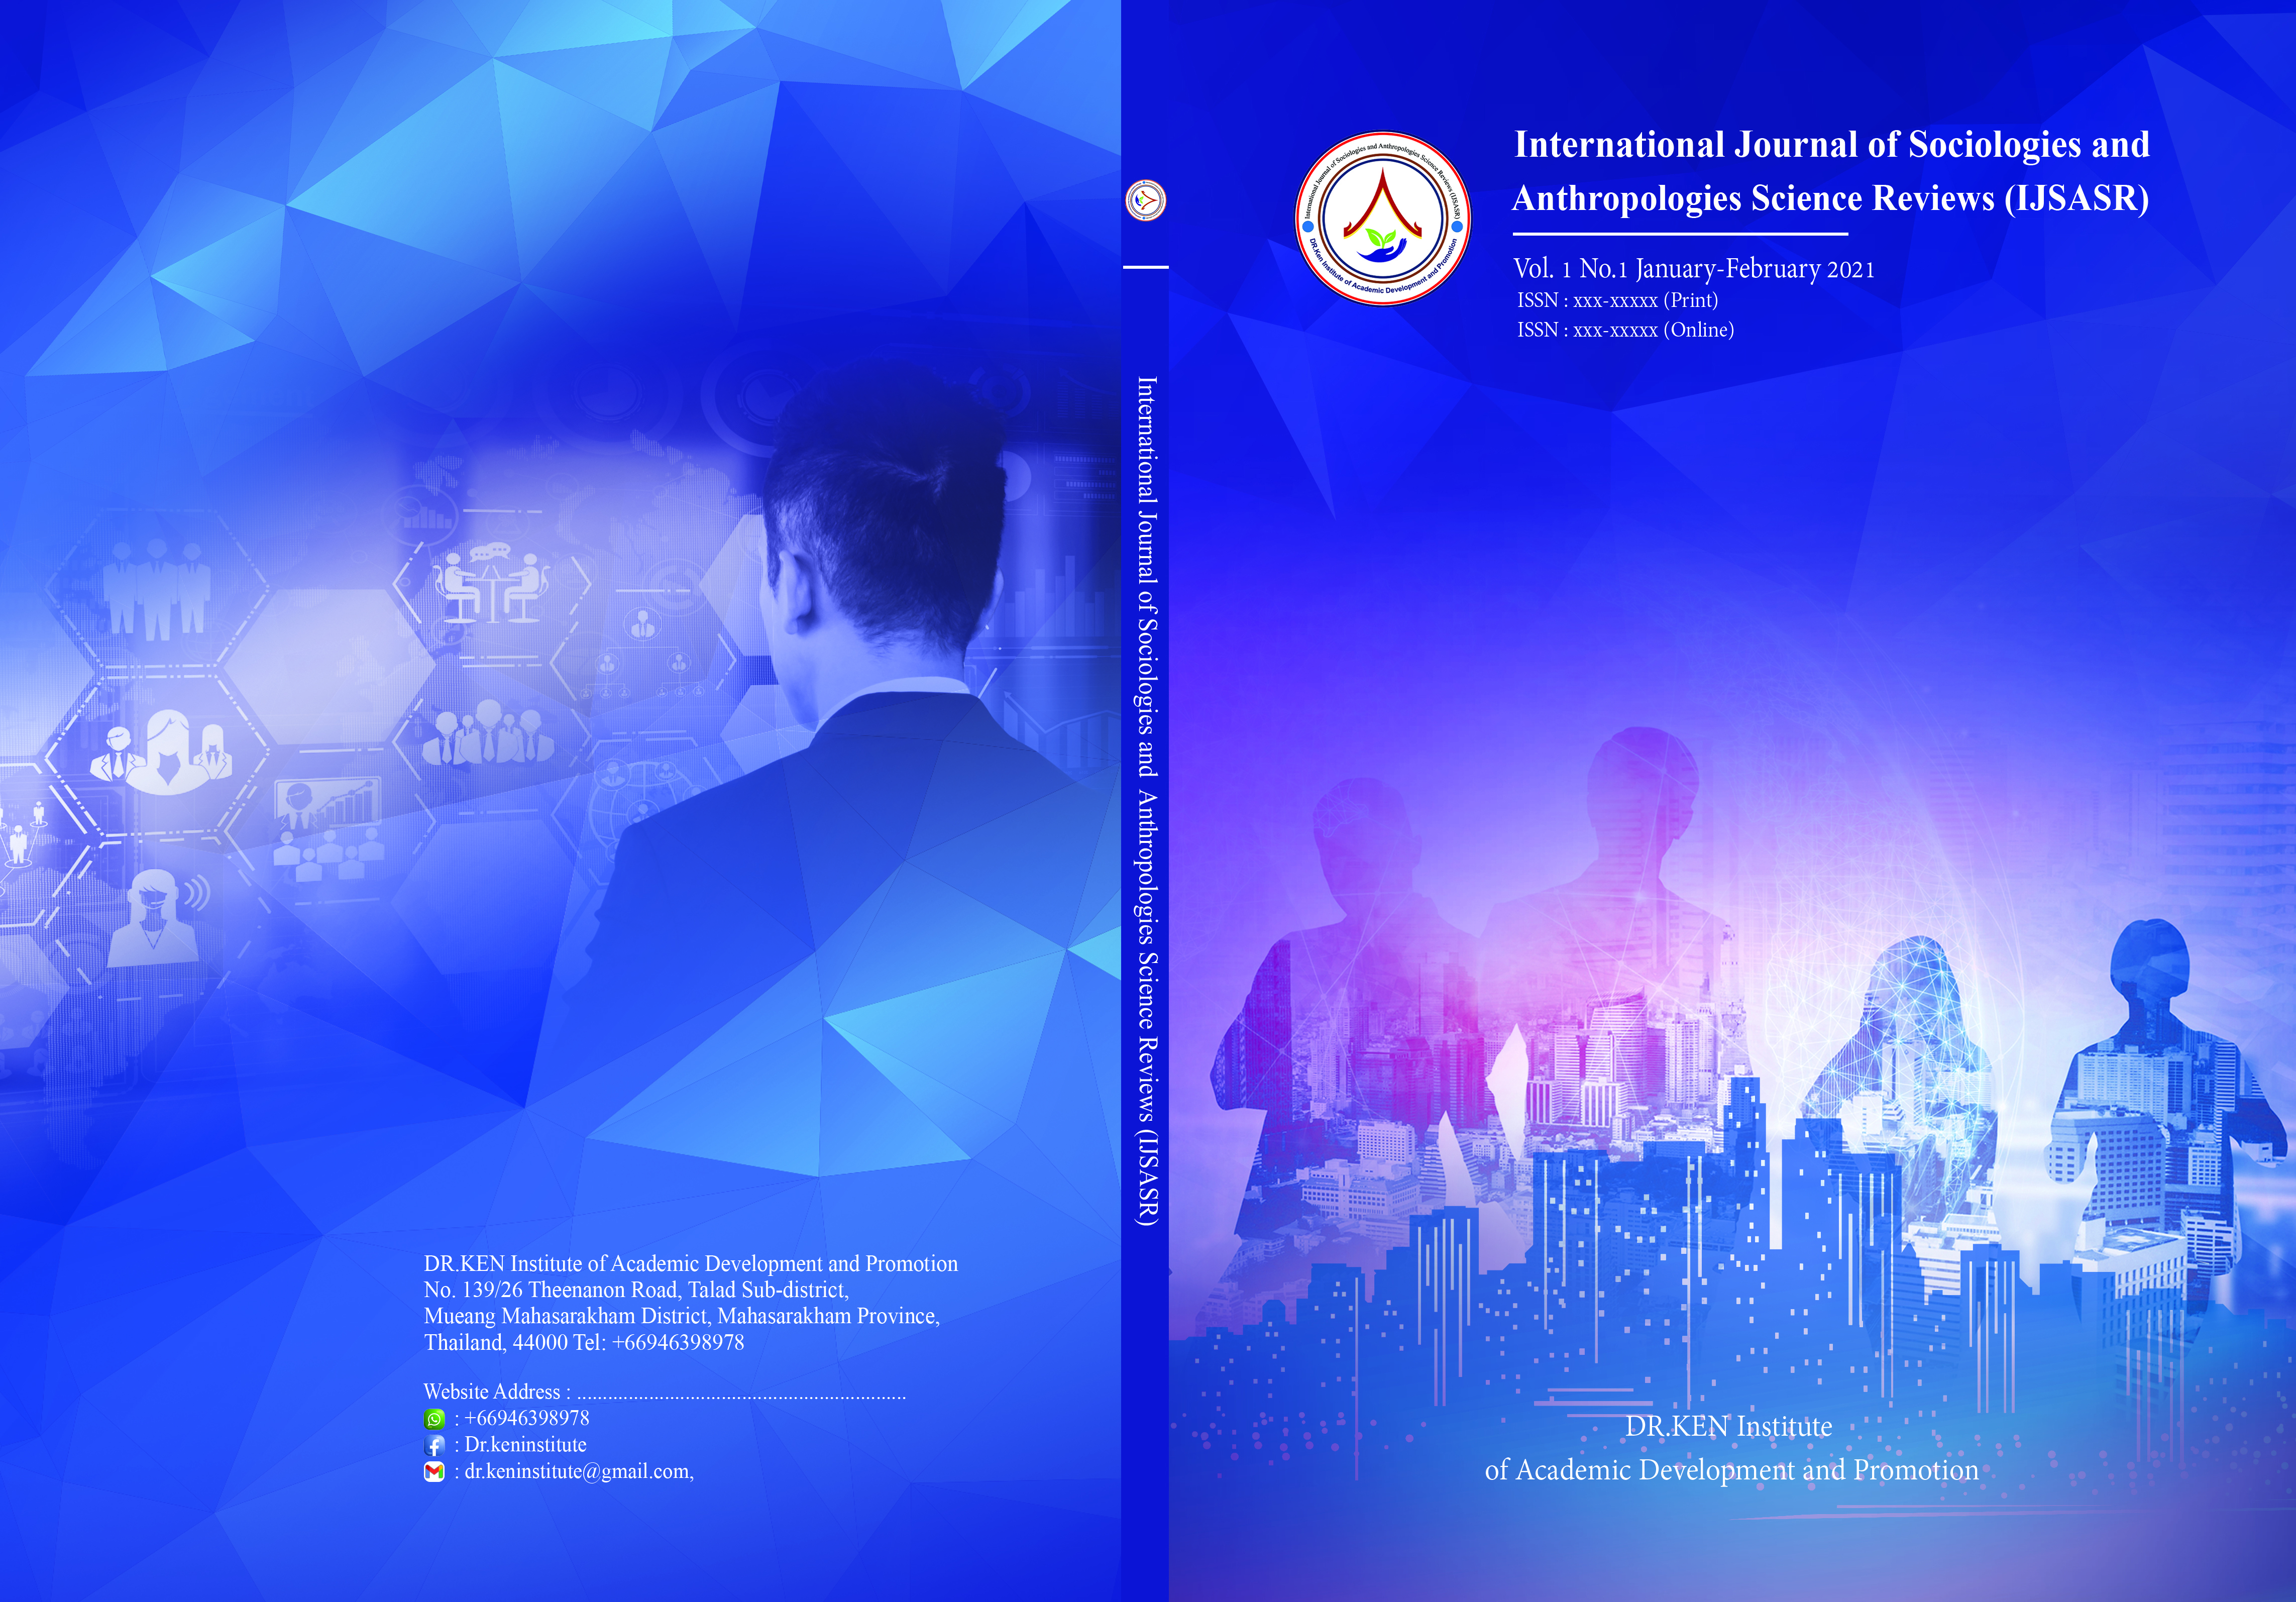 International Journal of Sociologies and Anthropologies Science Reviews